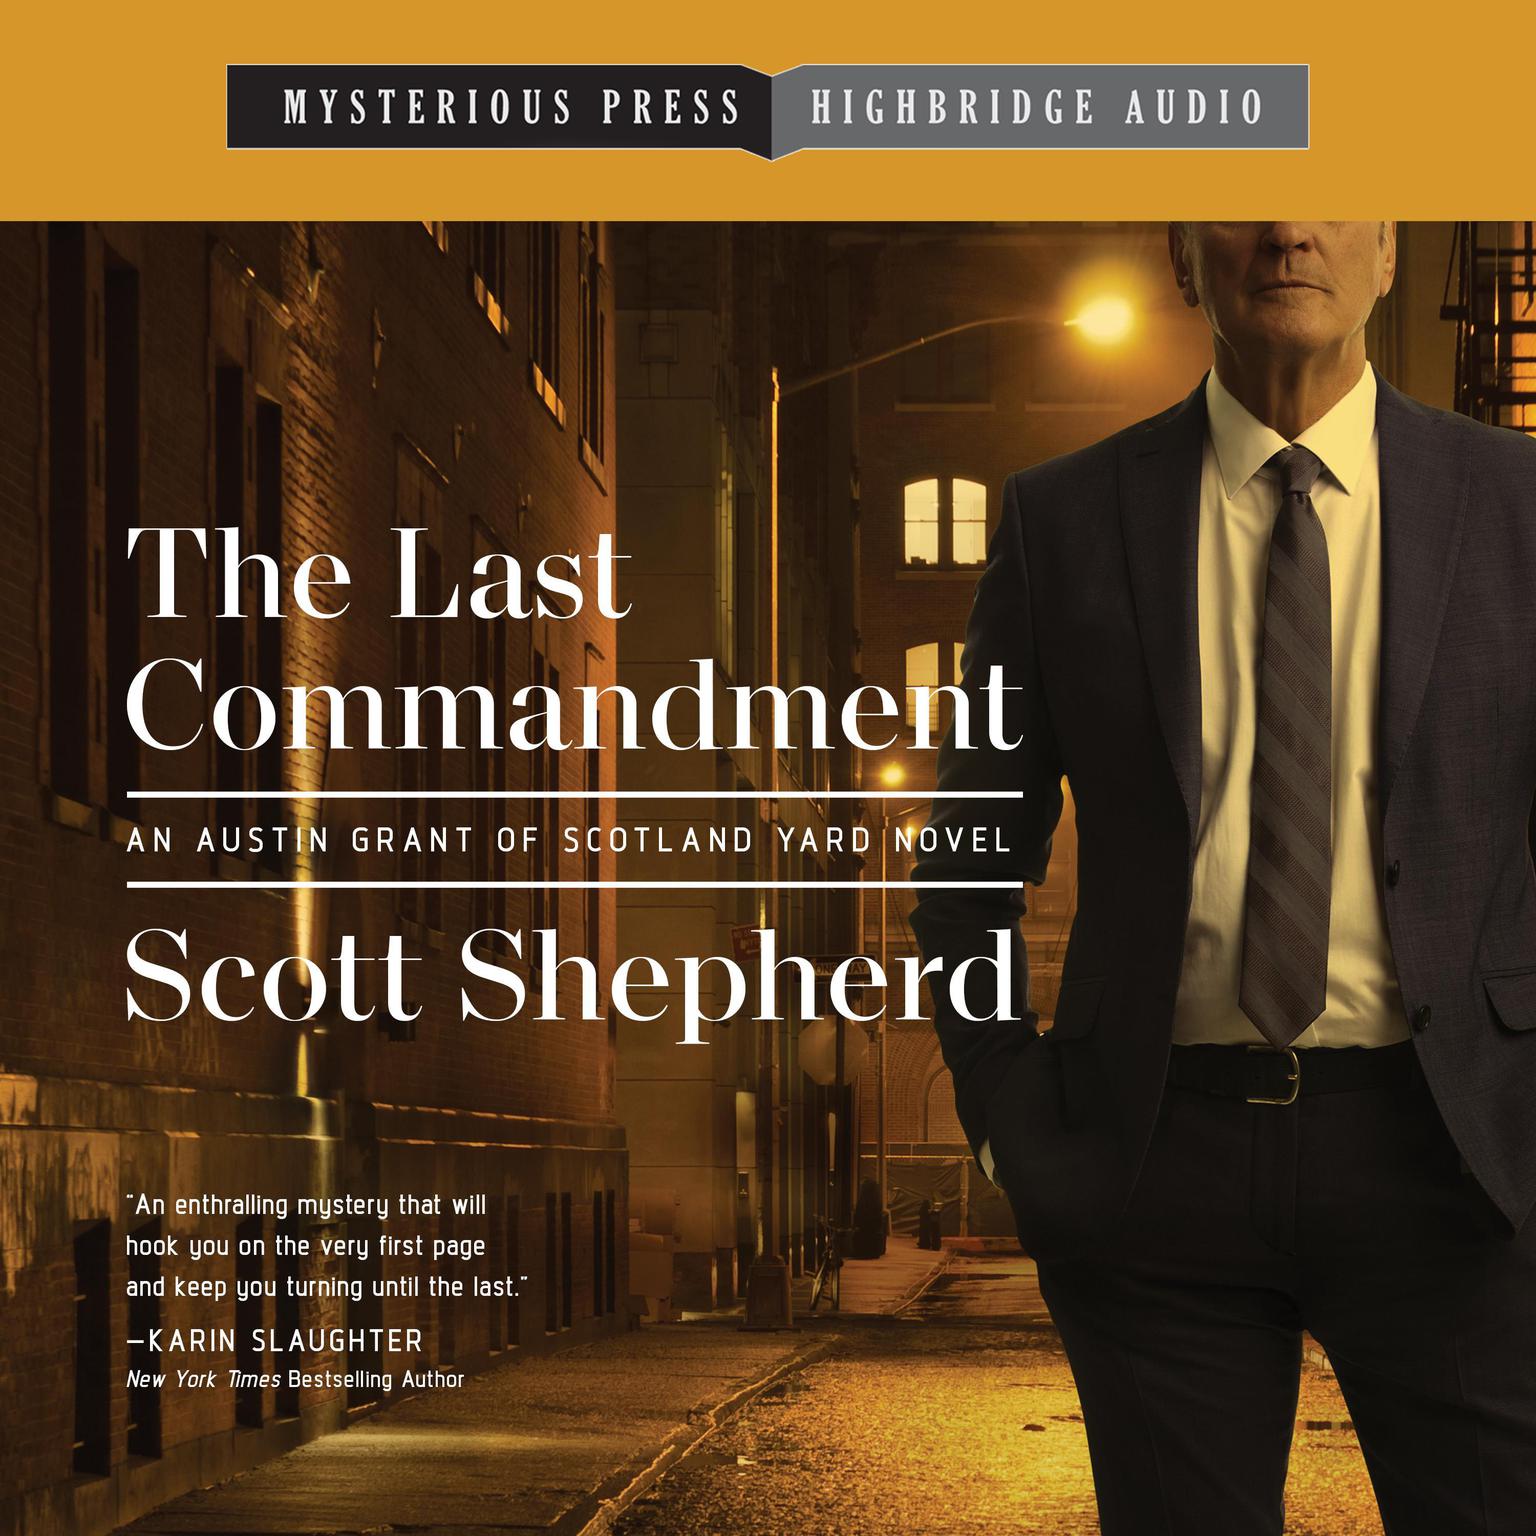 The Last Commandment Audiobook, by Scott Shepherd